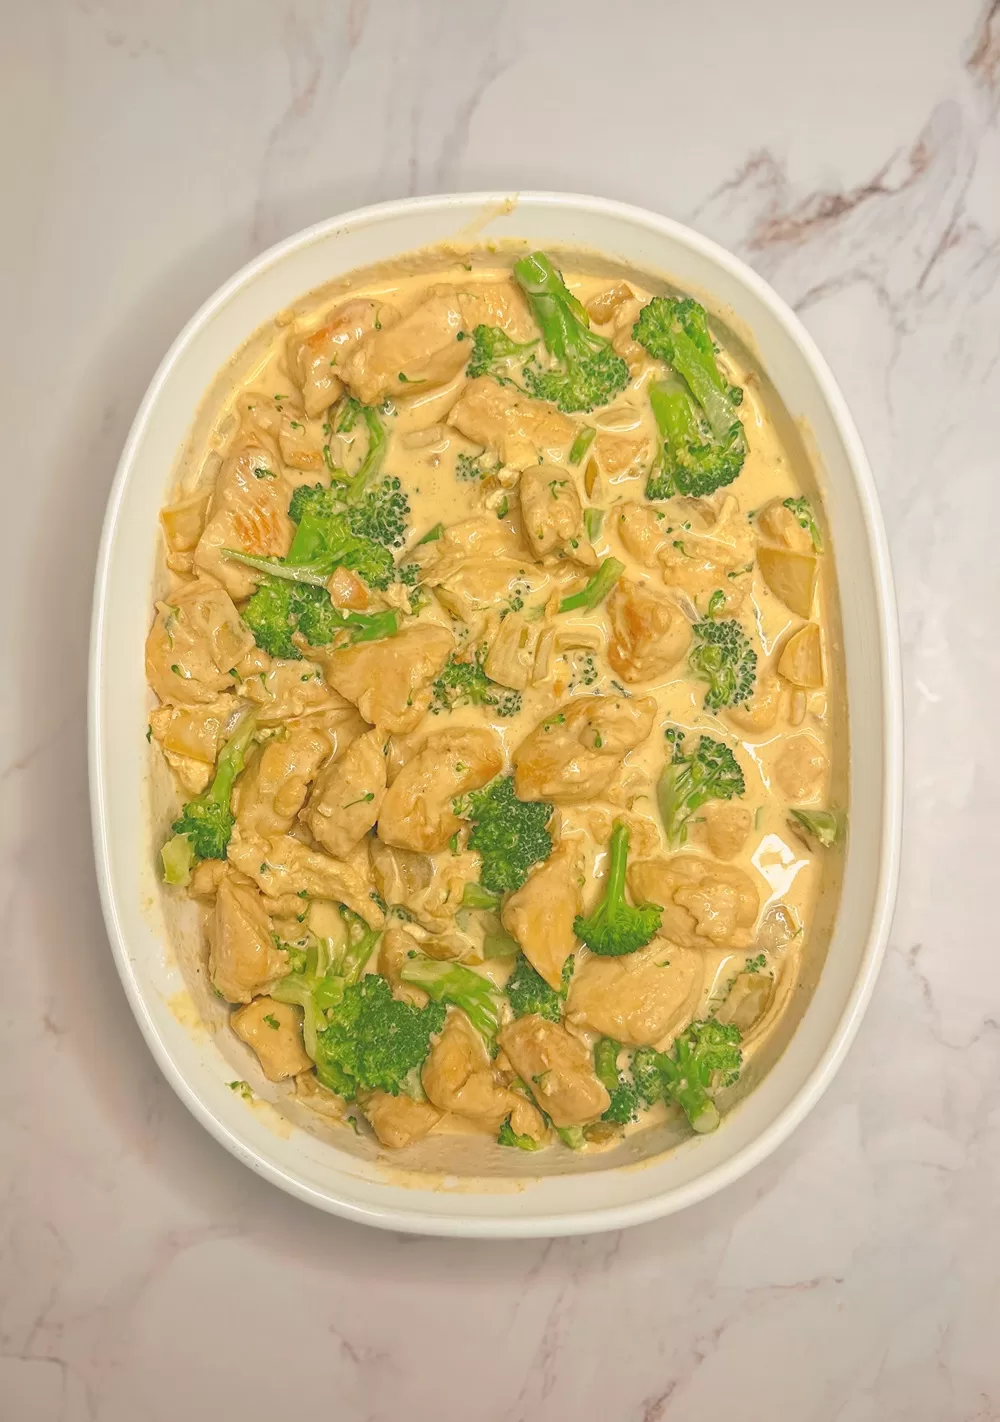 chicken and alfredo sauce with broccoli in a white casserole dish